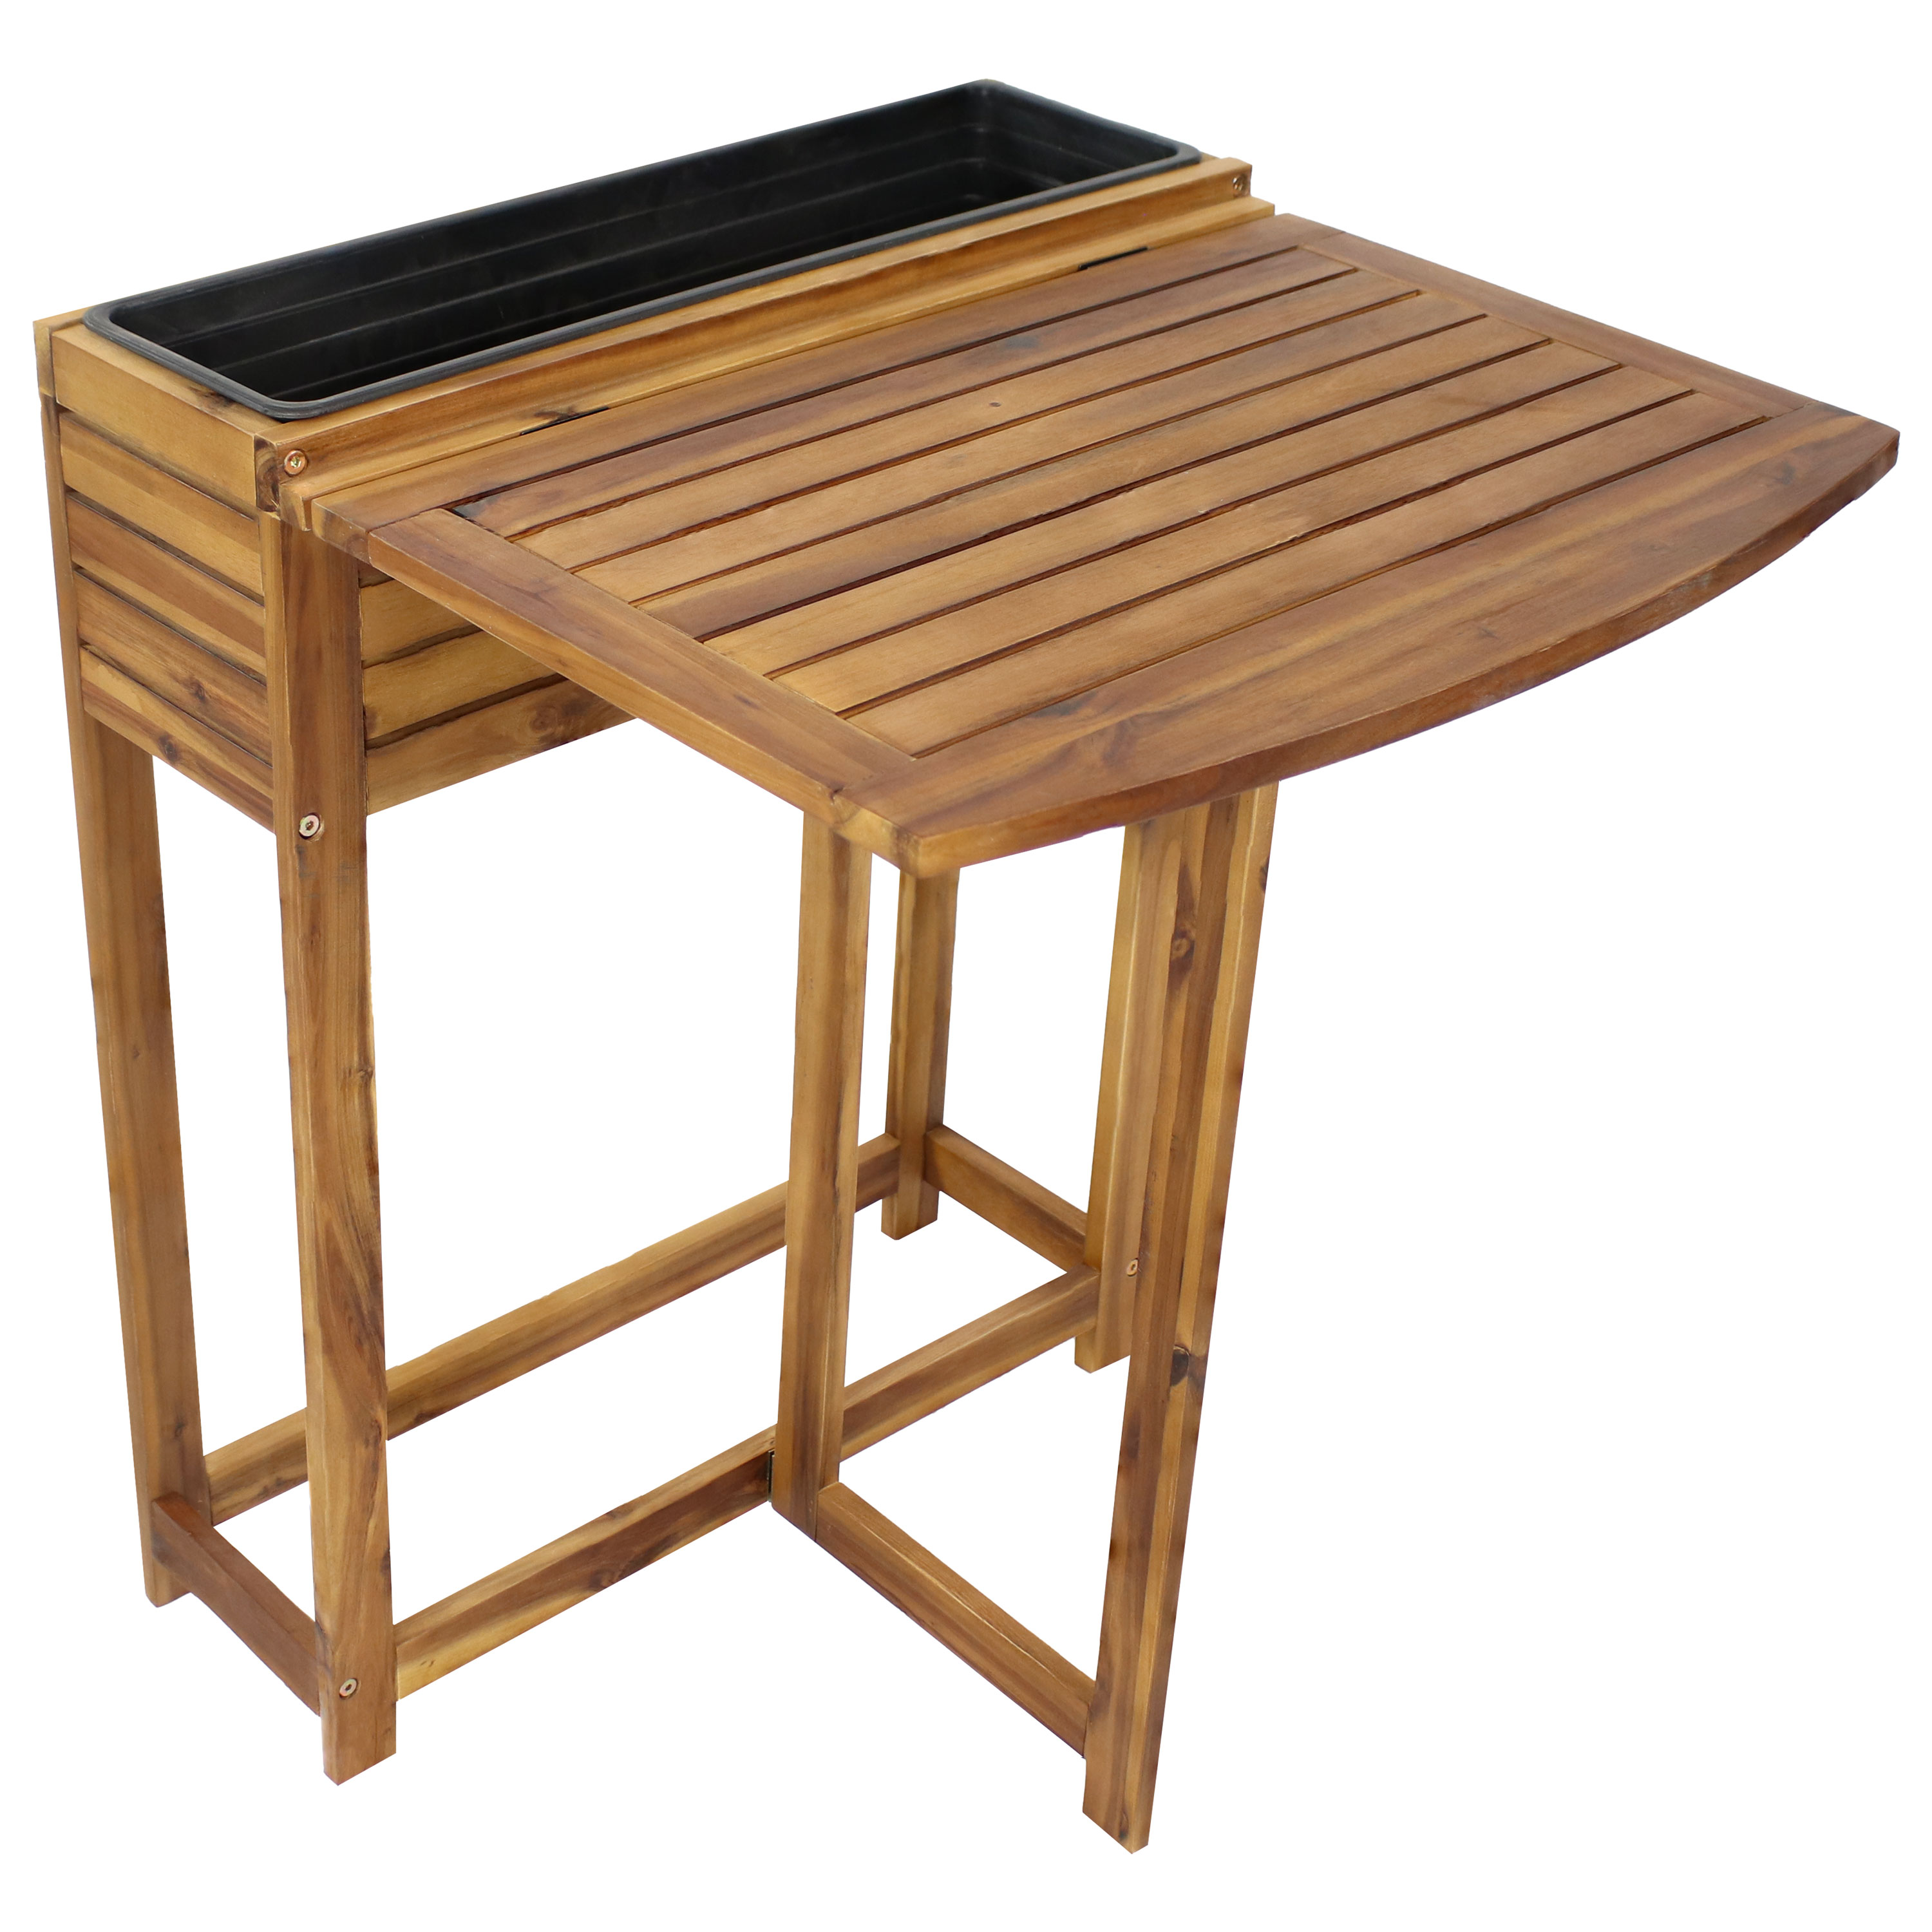 Acacia Folding Table with Planter Box - 30.5" H - Natural